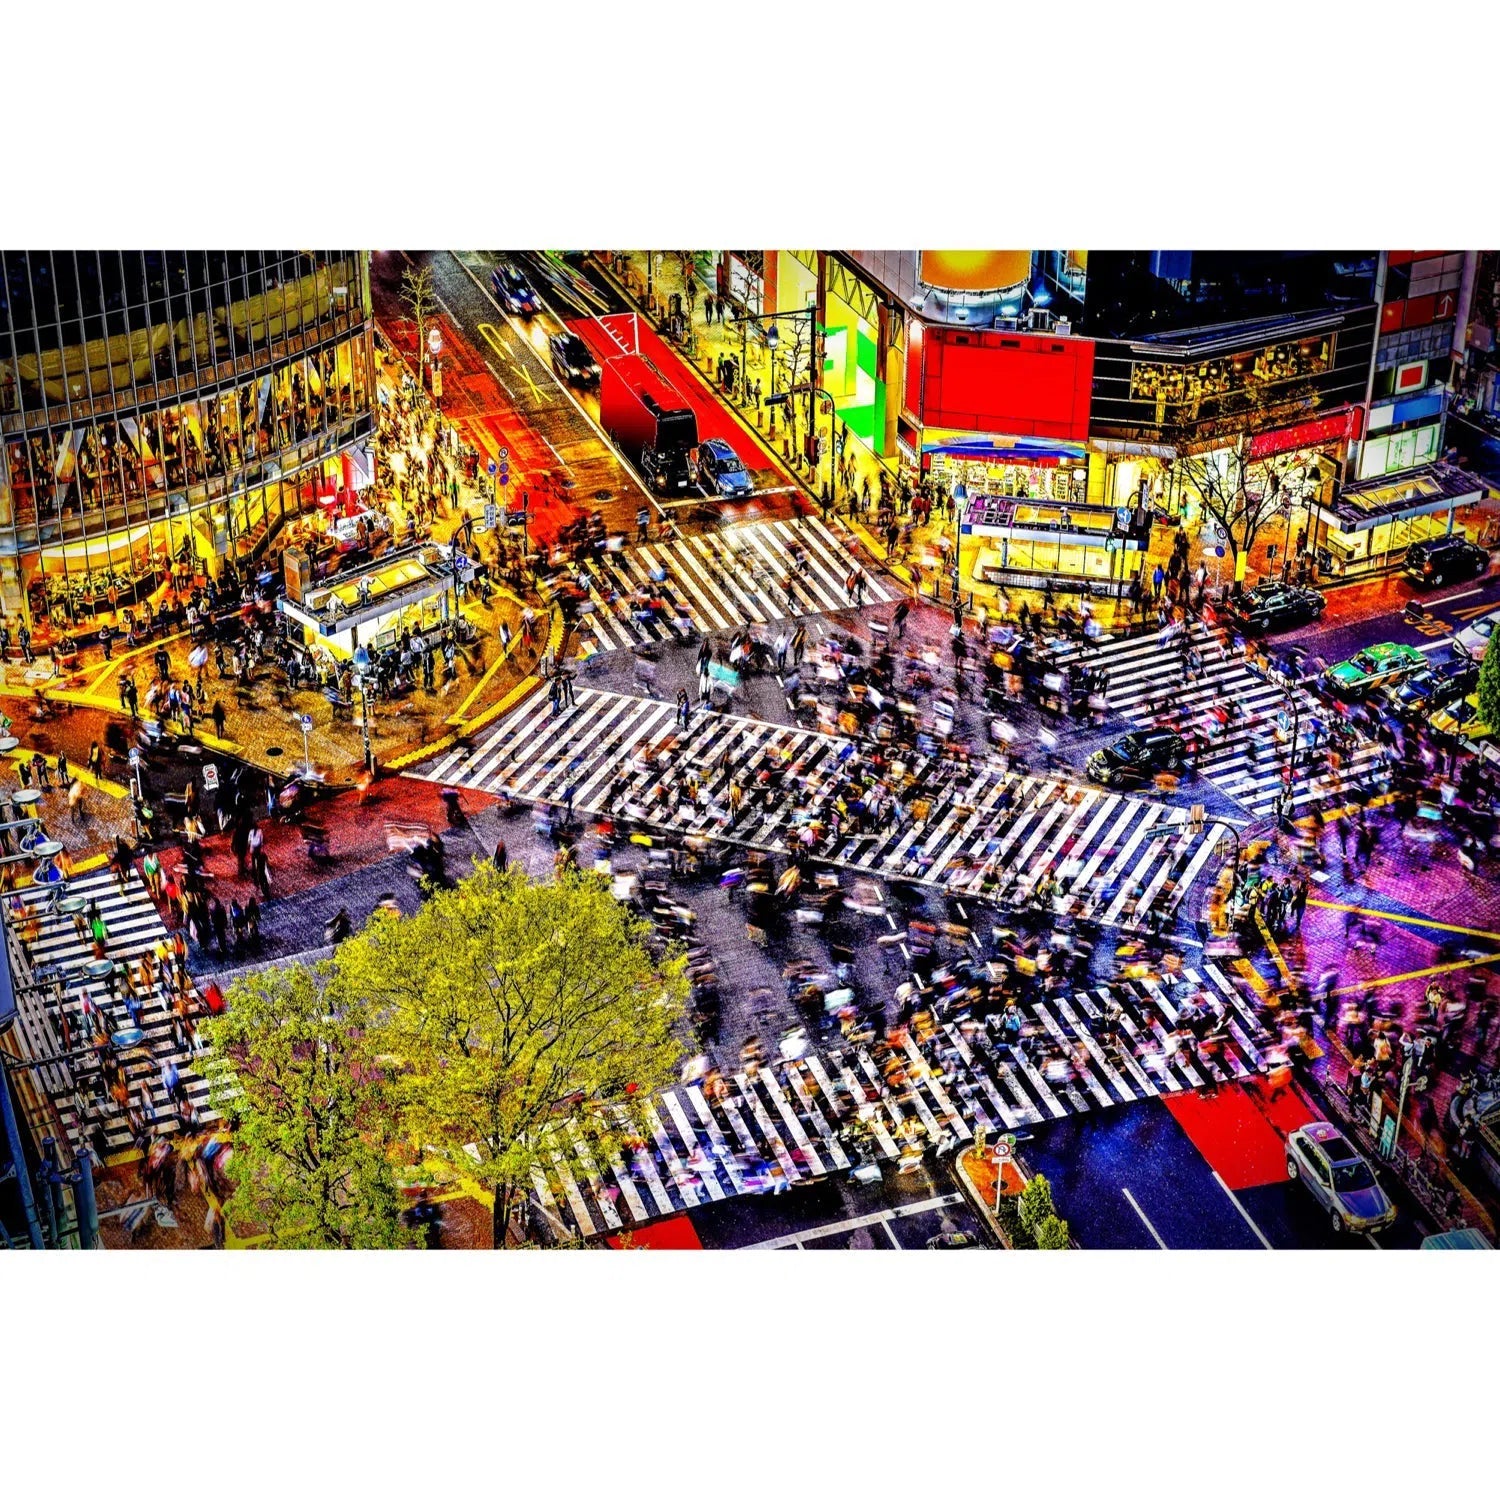 Shibuya Crossing - Tokyo-Imagesdartistes